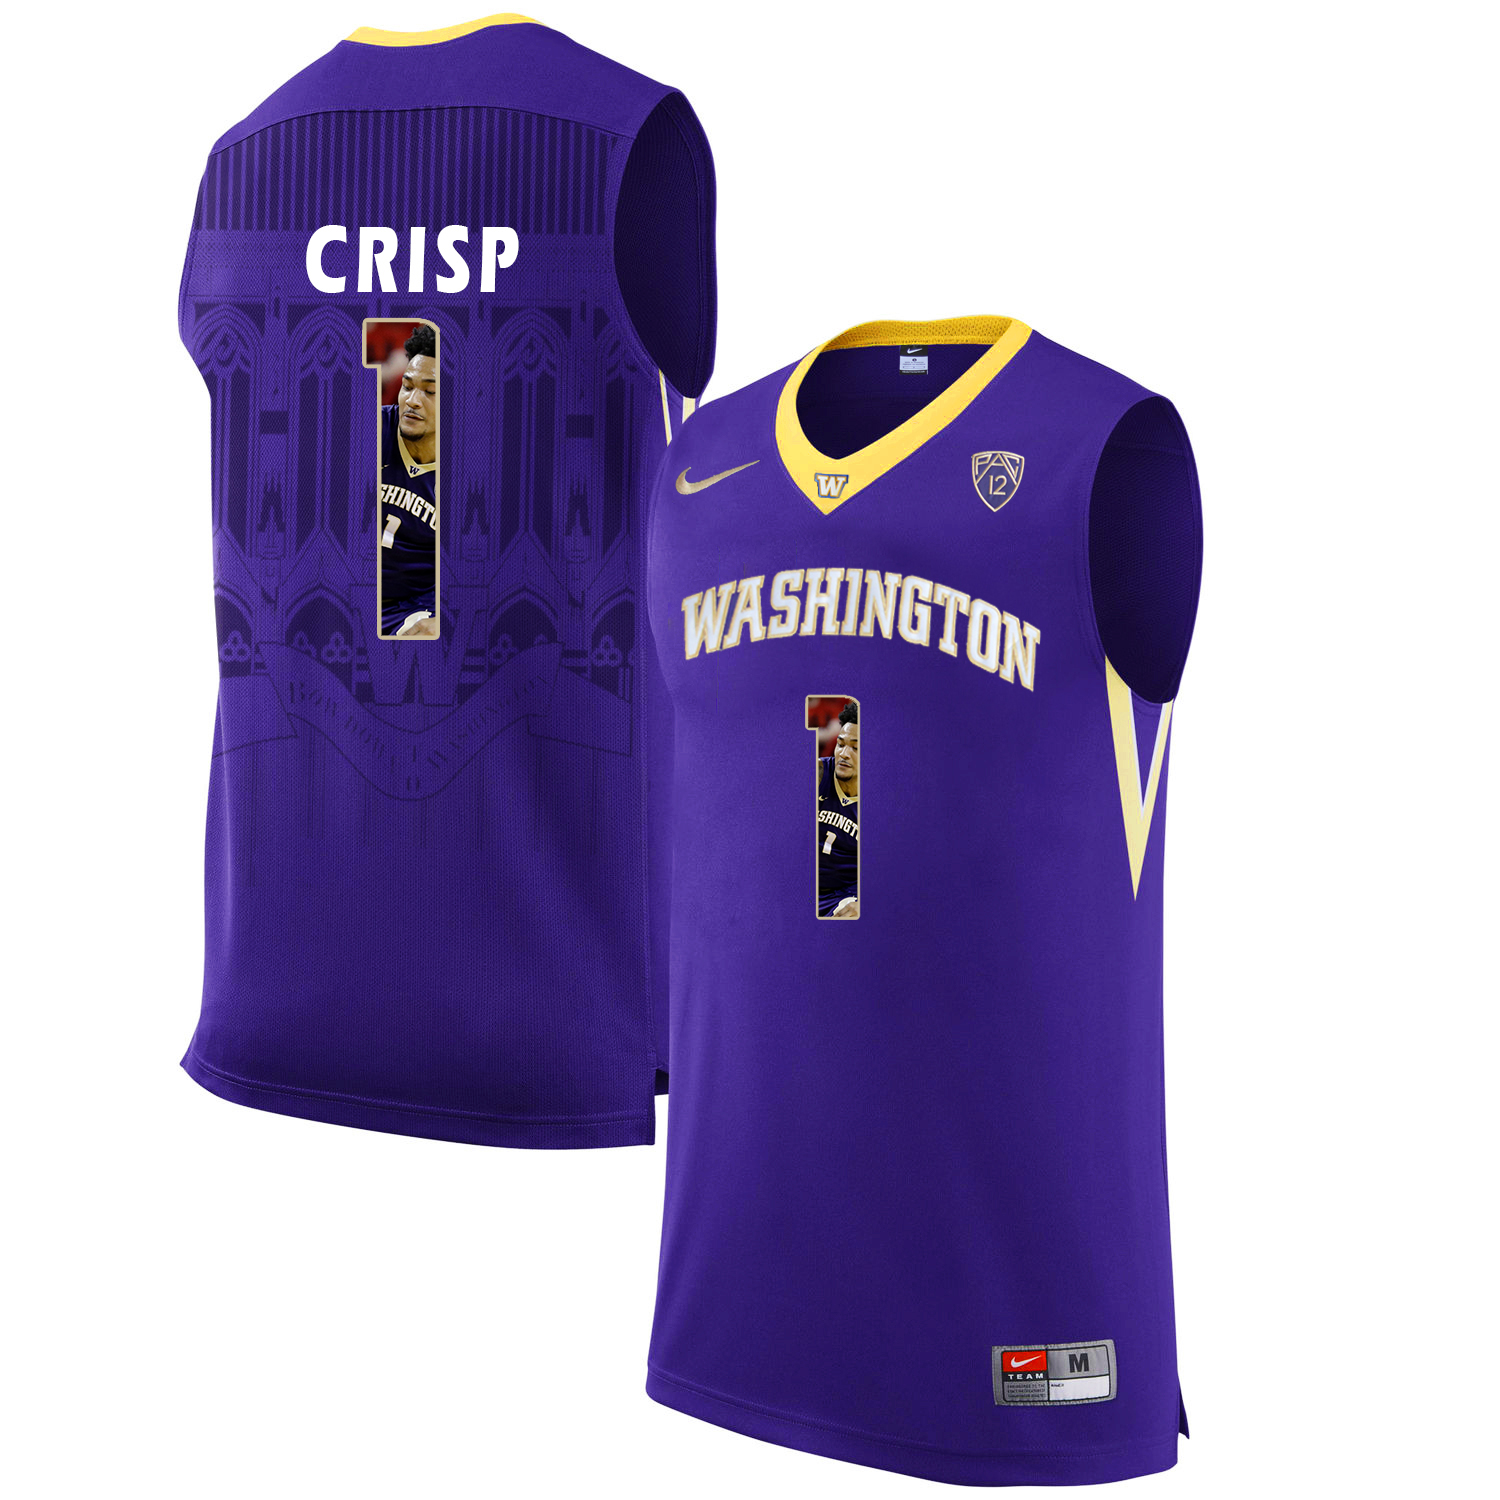 Washington Huskies 1 David Crisp Purple With Portait College Basketball Jersey